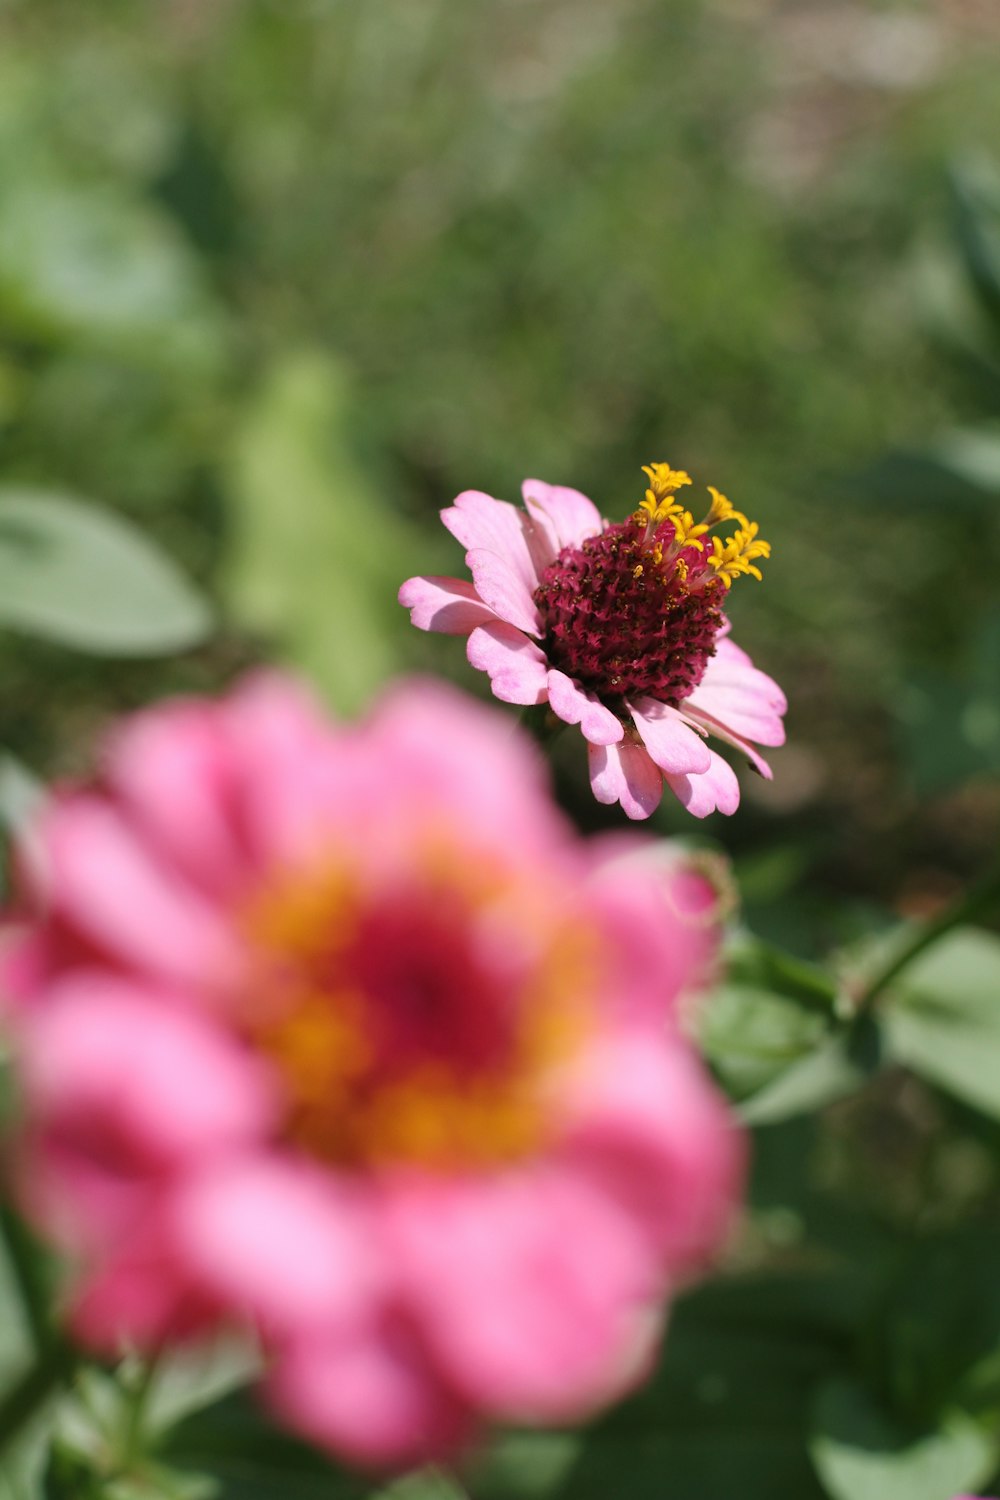 pink and yellow flower in tilt shift lens